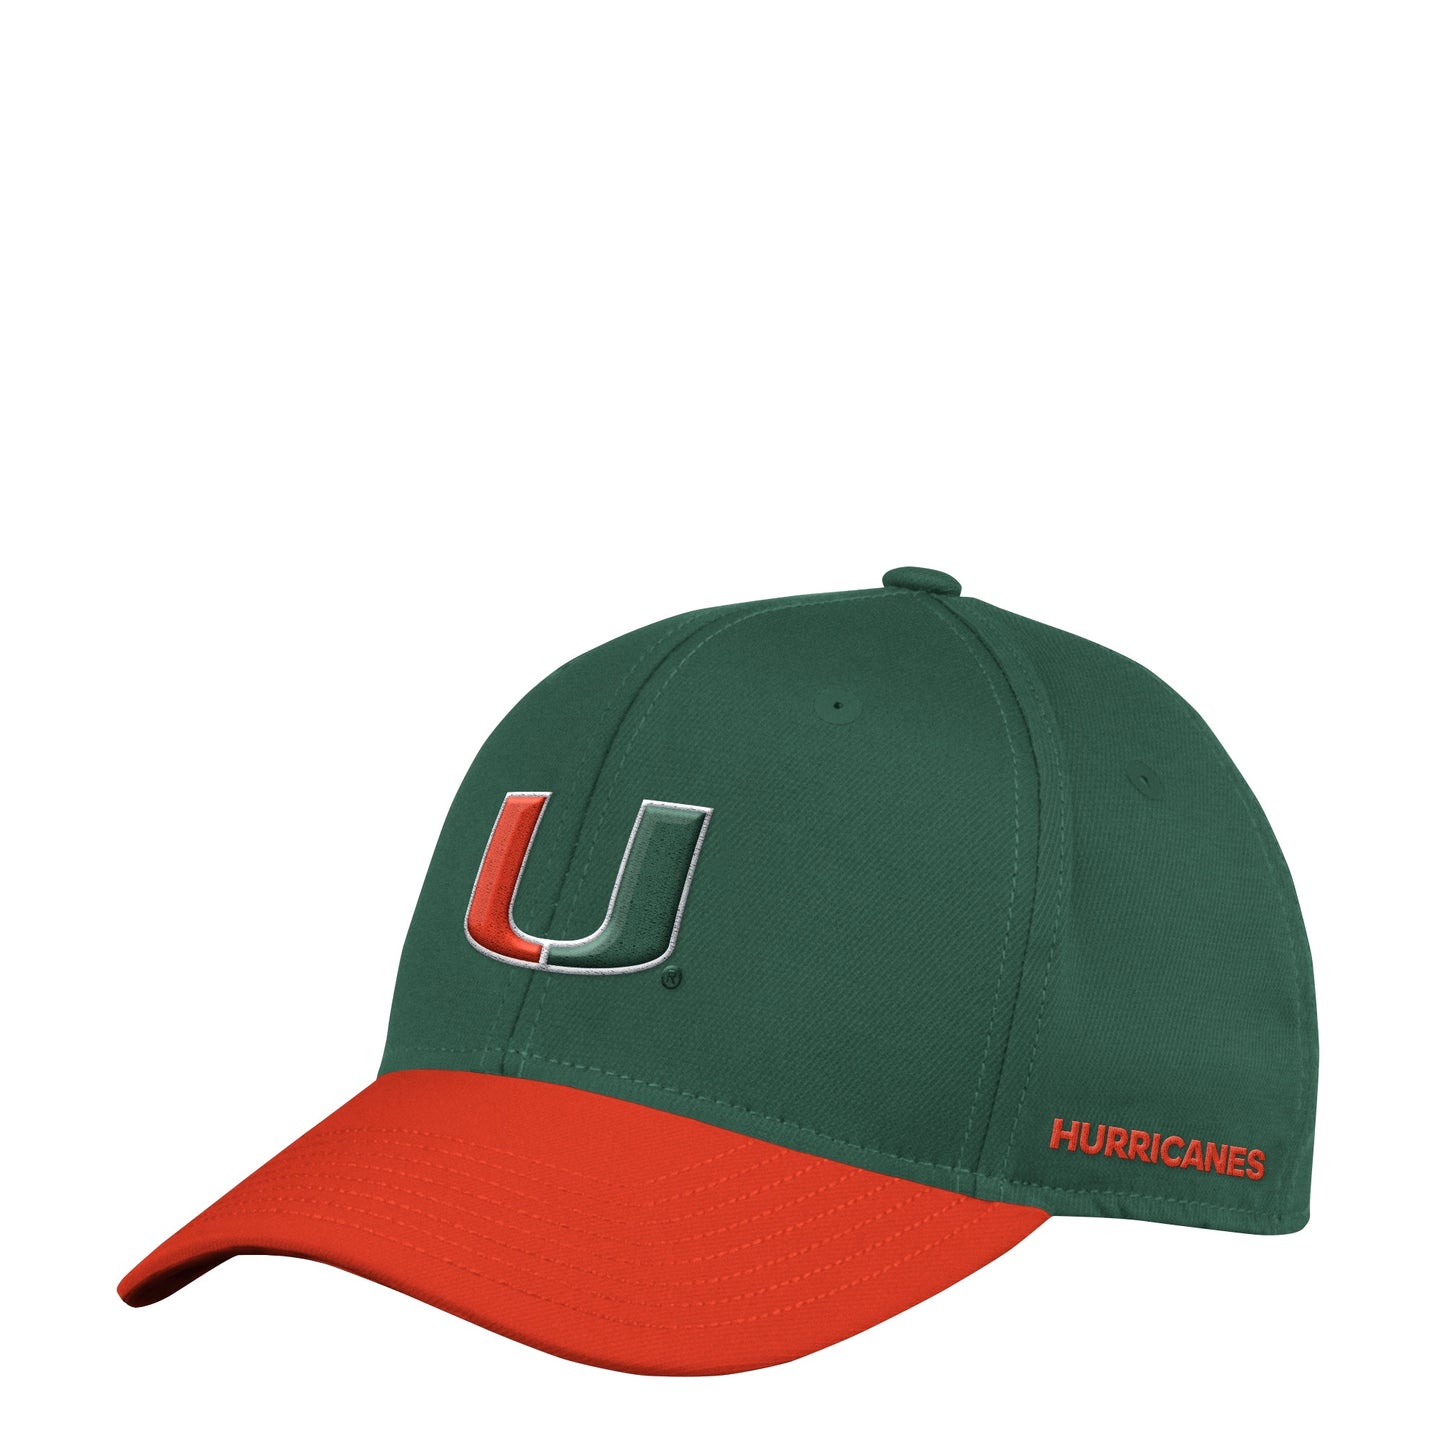 Miami Hurricanes Green/Orange Climalite Coach Official Sideline Flex Fit Adidas Hat